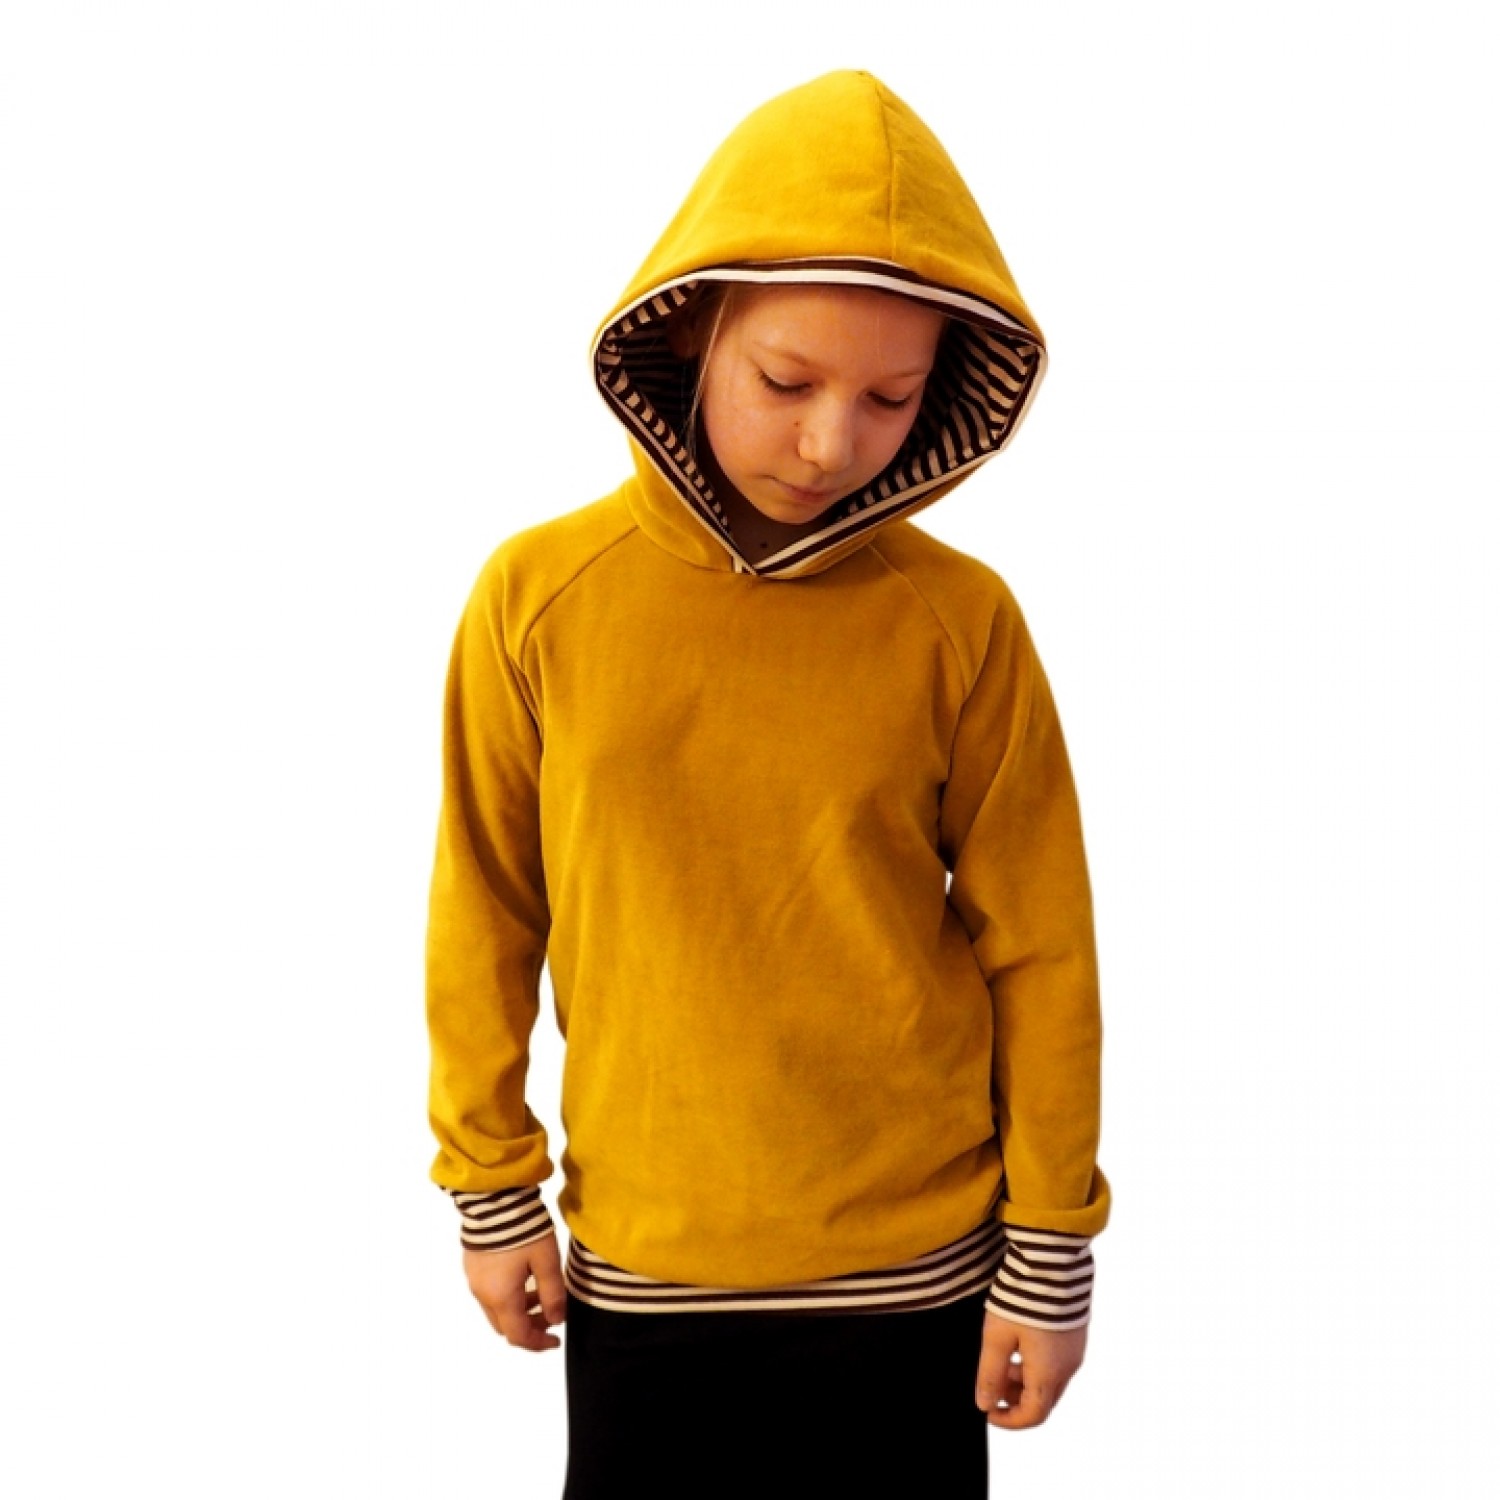 Girls and Boys Mustard Yellow Organic Cotton Zip Front Pocket Hoodie Clothing Unisex Kids Clothing Hoodies & Sweatshirts Hoodies 